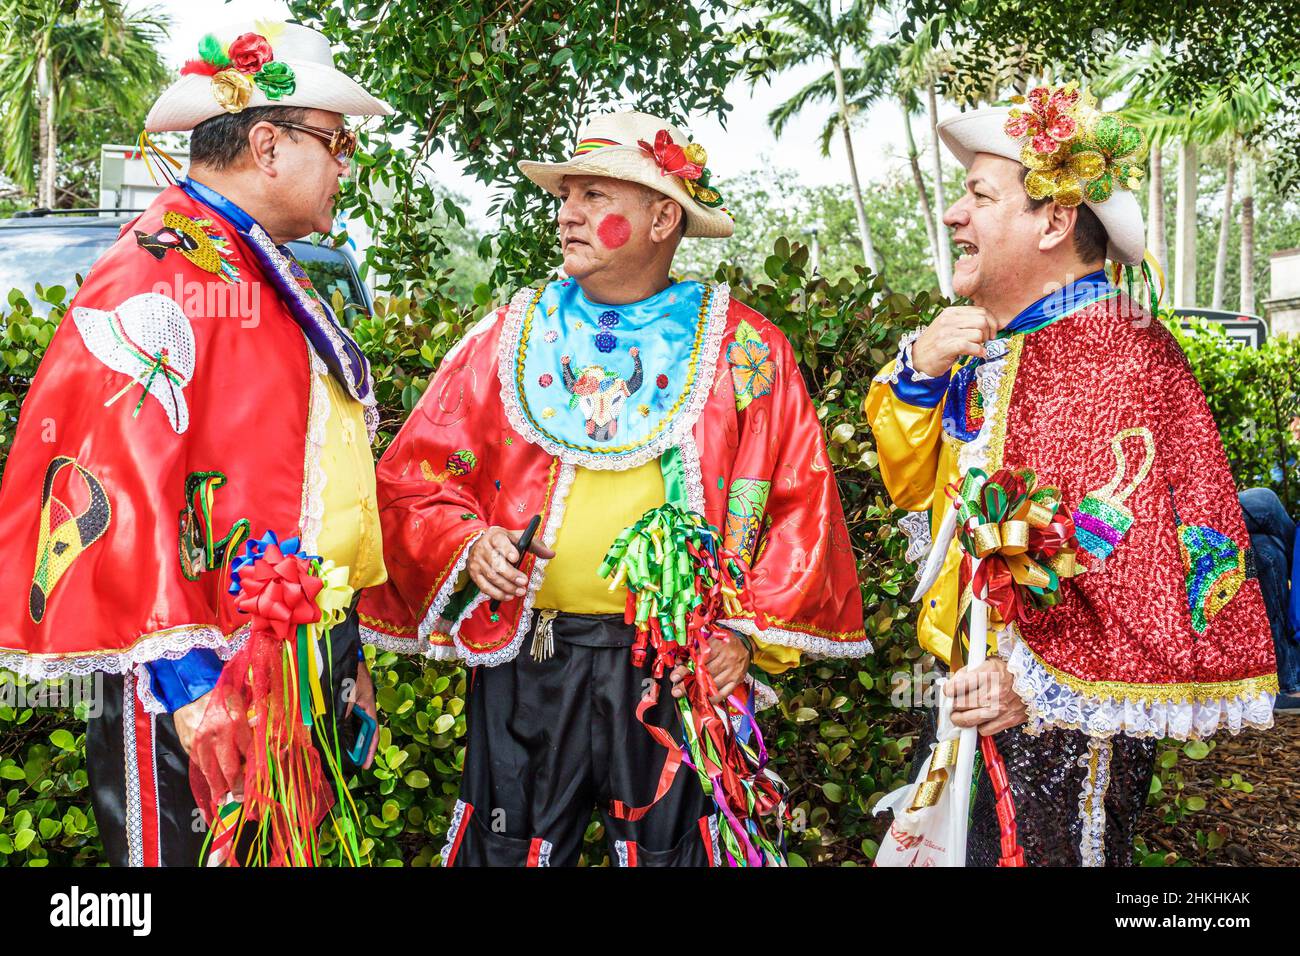 Florida,Coral Gables,Hispanic Cultural Festival dance group dancers costumes,Baile del Garabato,Barranquilla Carnival,Hispanic men friends talking Stock Photo